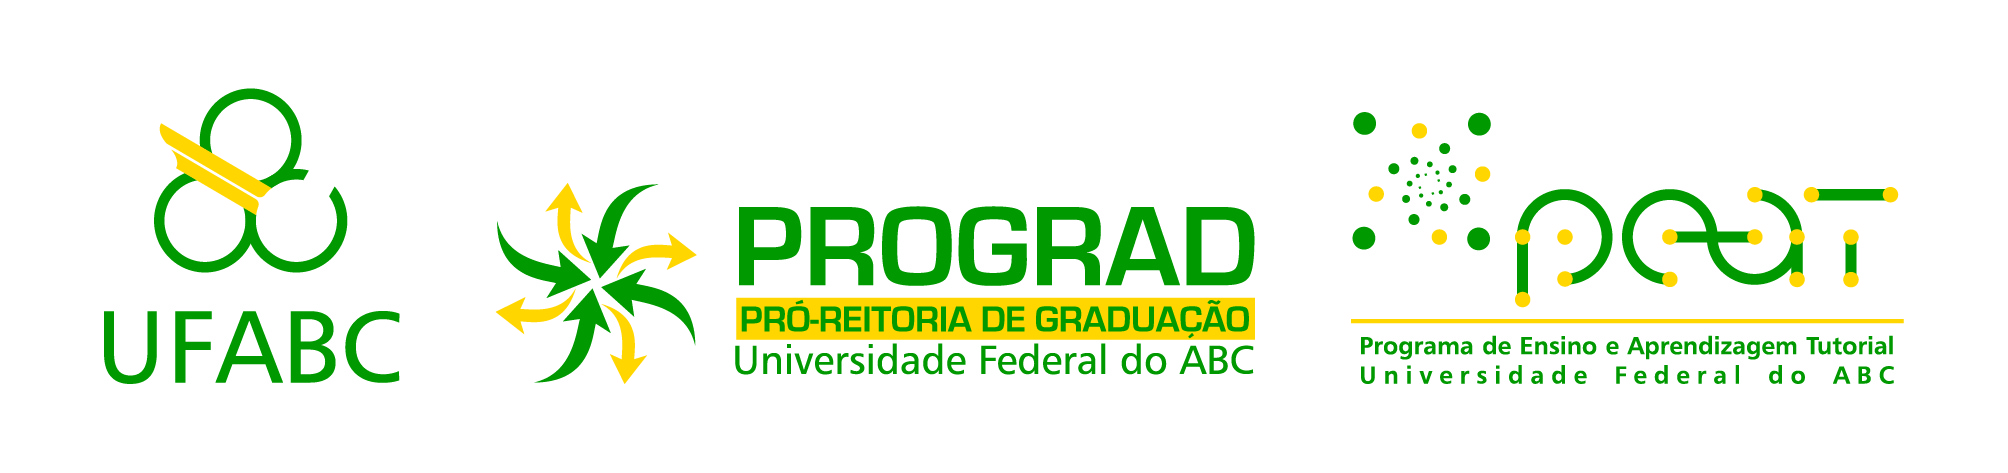 Logotipos UFABC, Prograd e PEAT